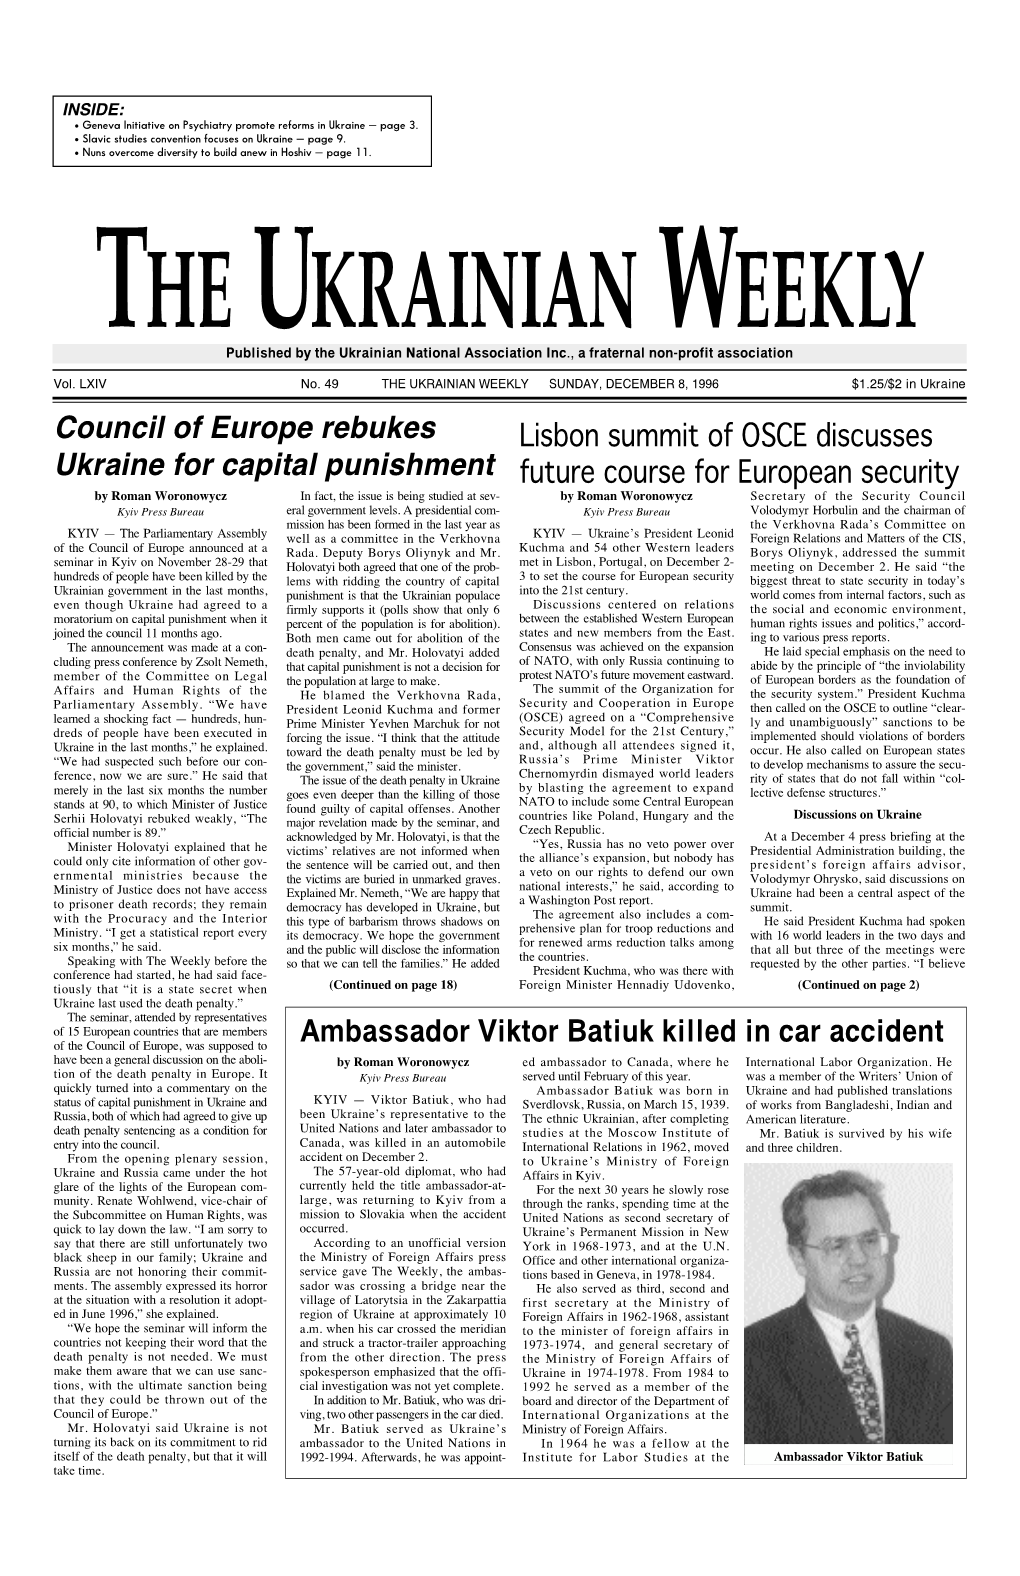 The Ukrainian Weekly 1996, No.49